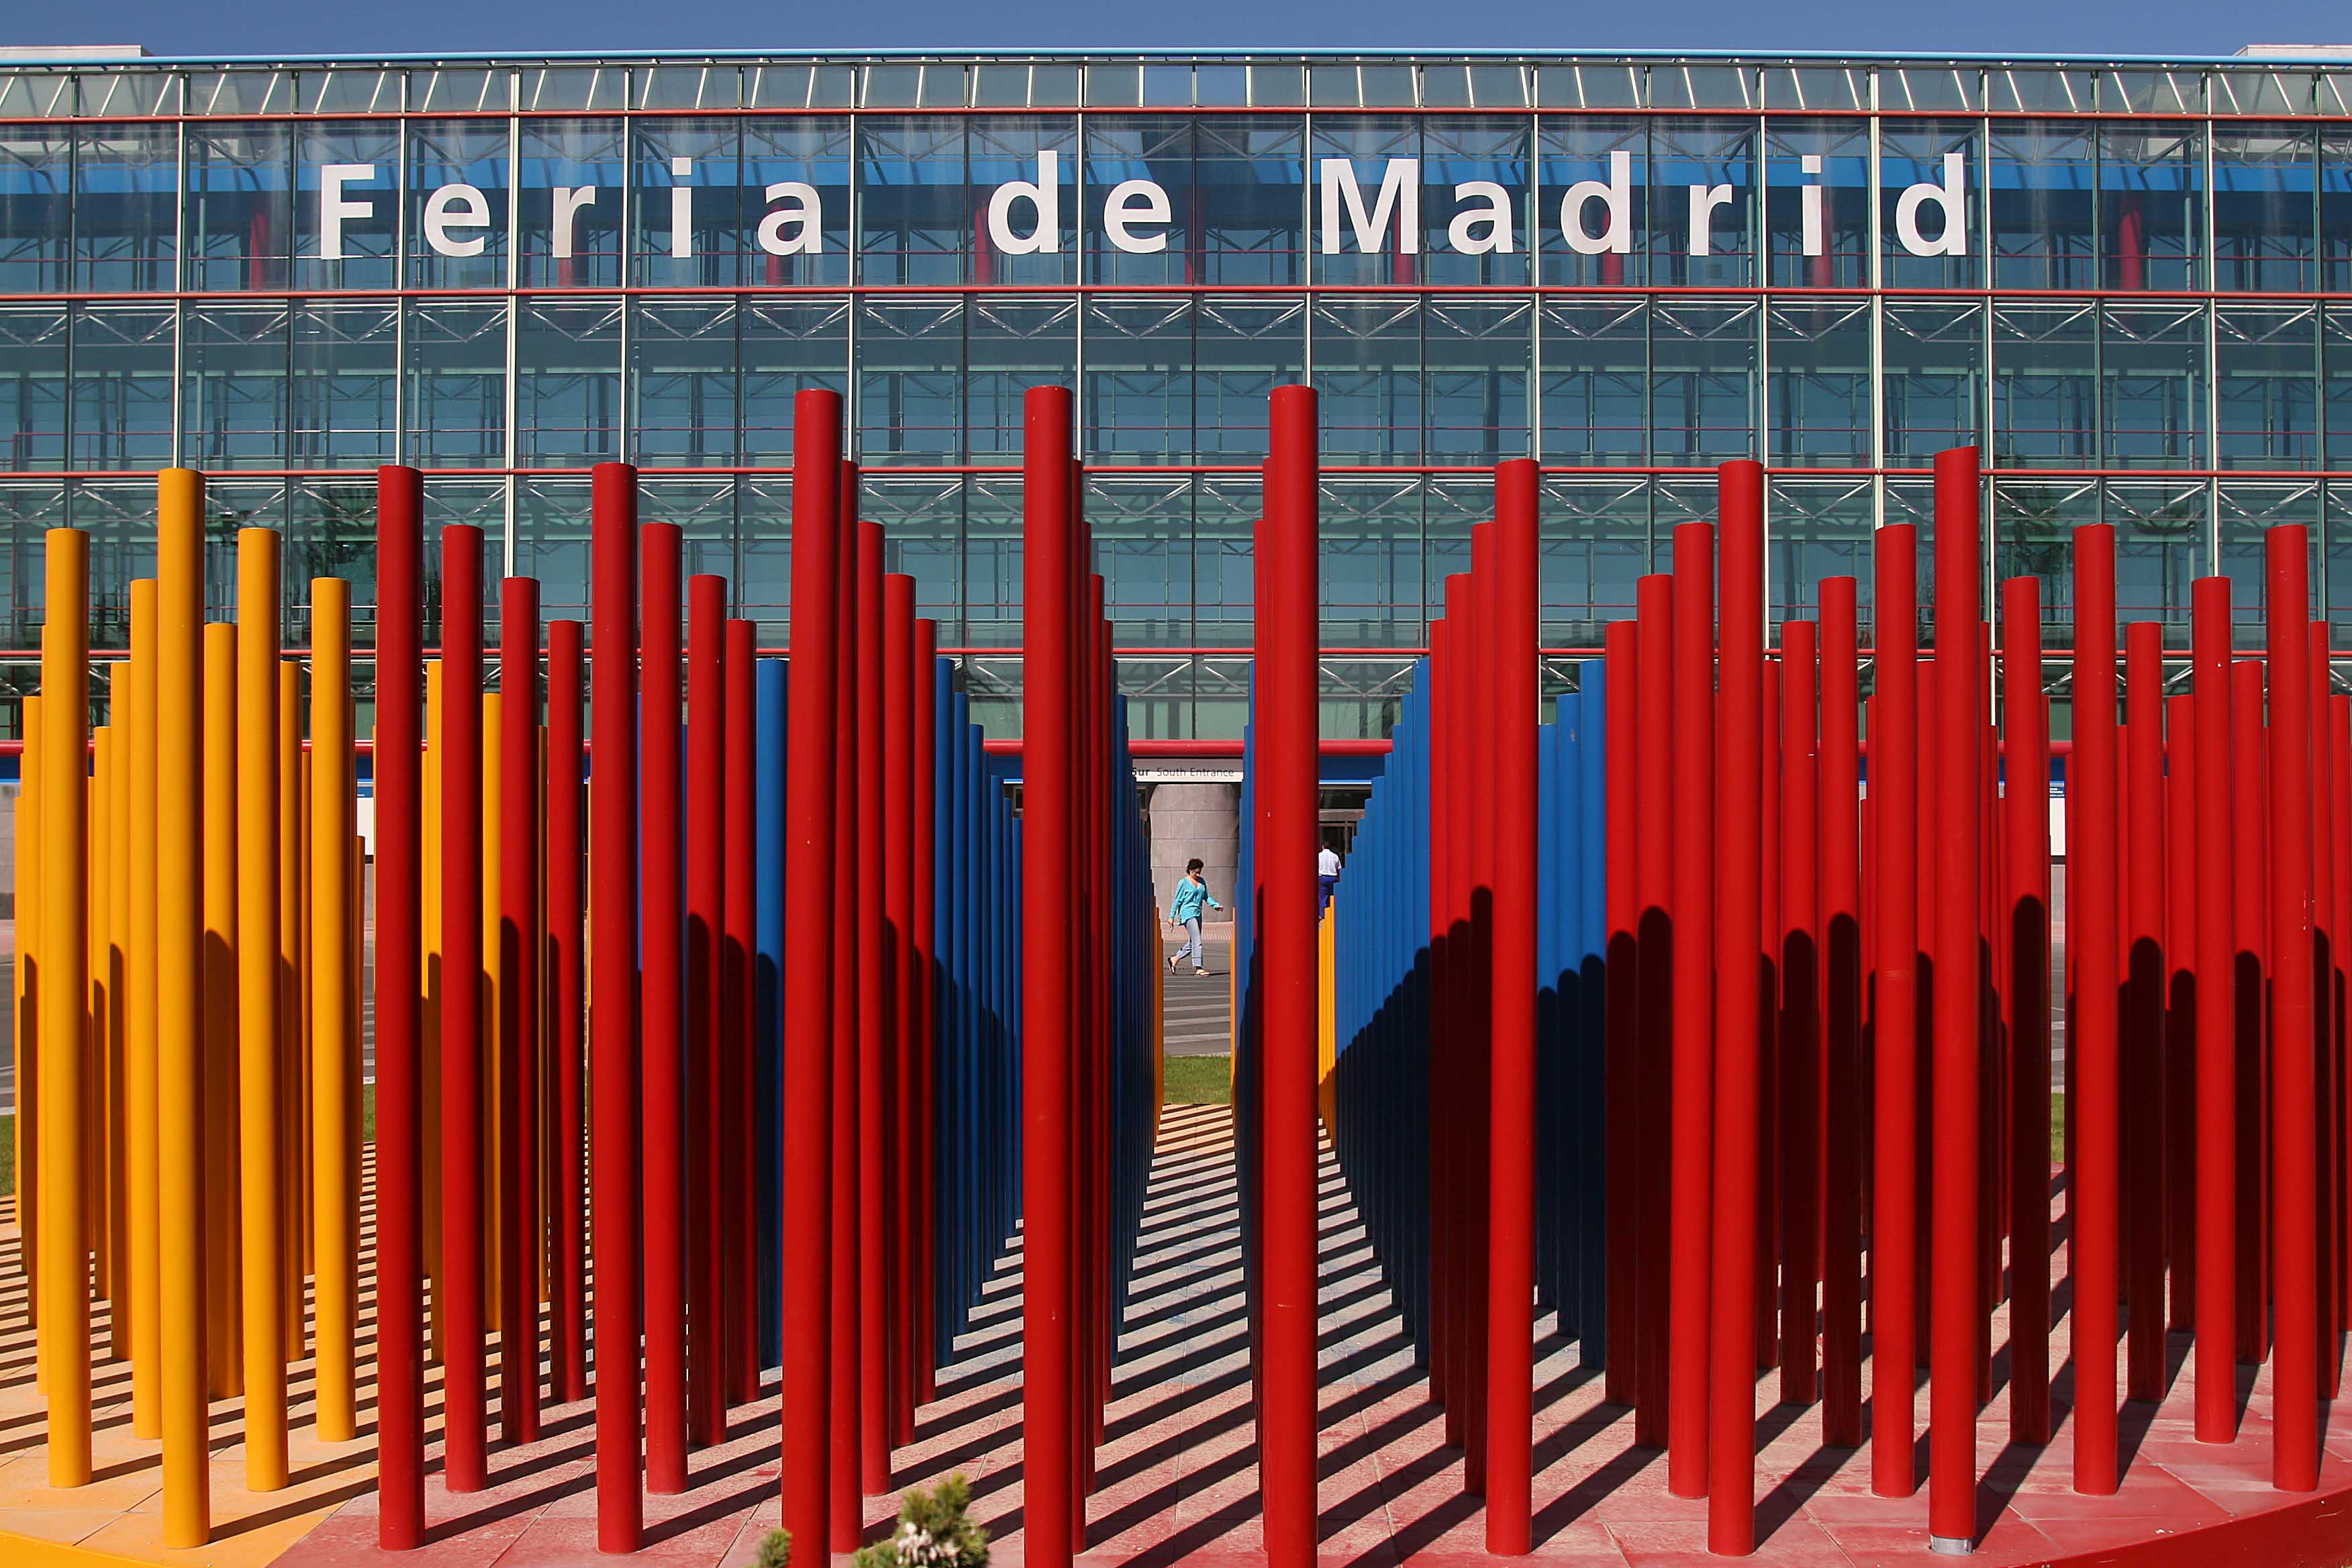 Feria-de-Madrid1.jpg